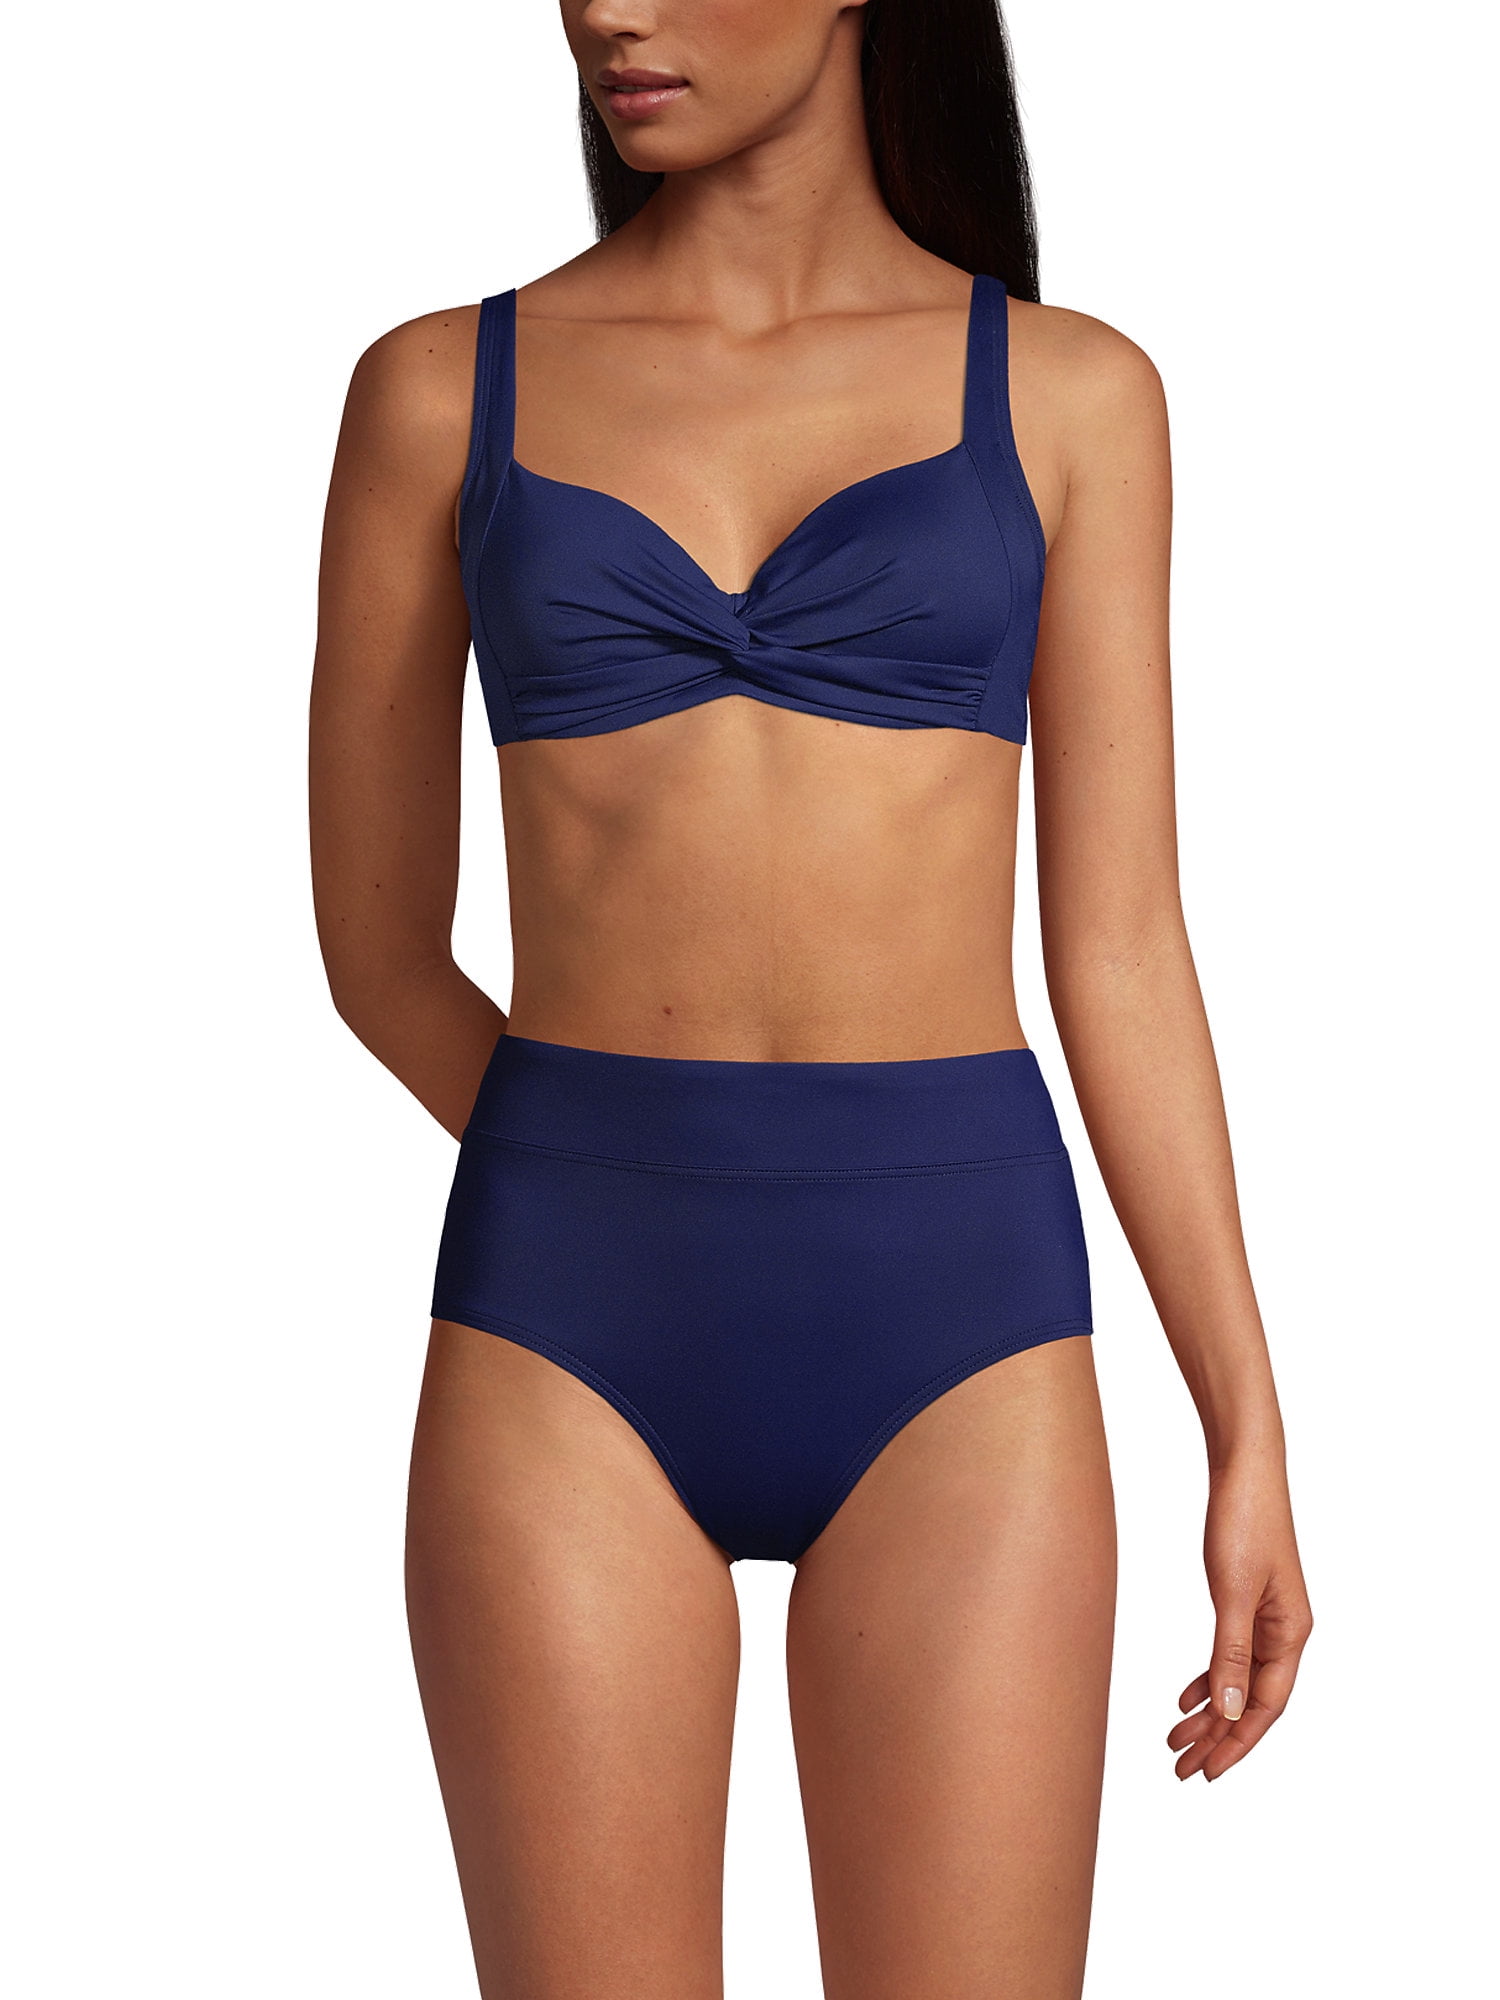 Lands' End Women's DDD-Cup Chlorine Resistant Twist Front Underwire Bikini  Swimsuit Top Adjustable Straps - 8 - Deep Sea Navy 